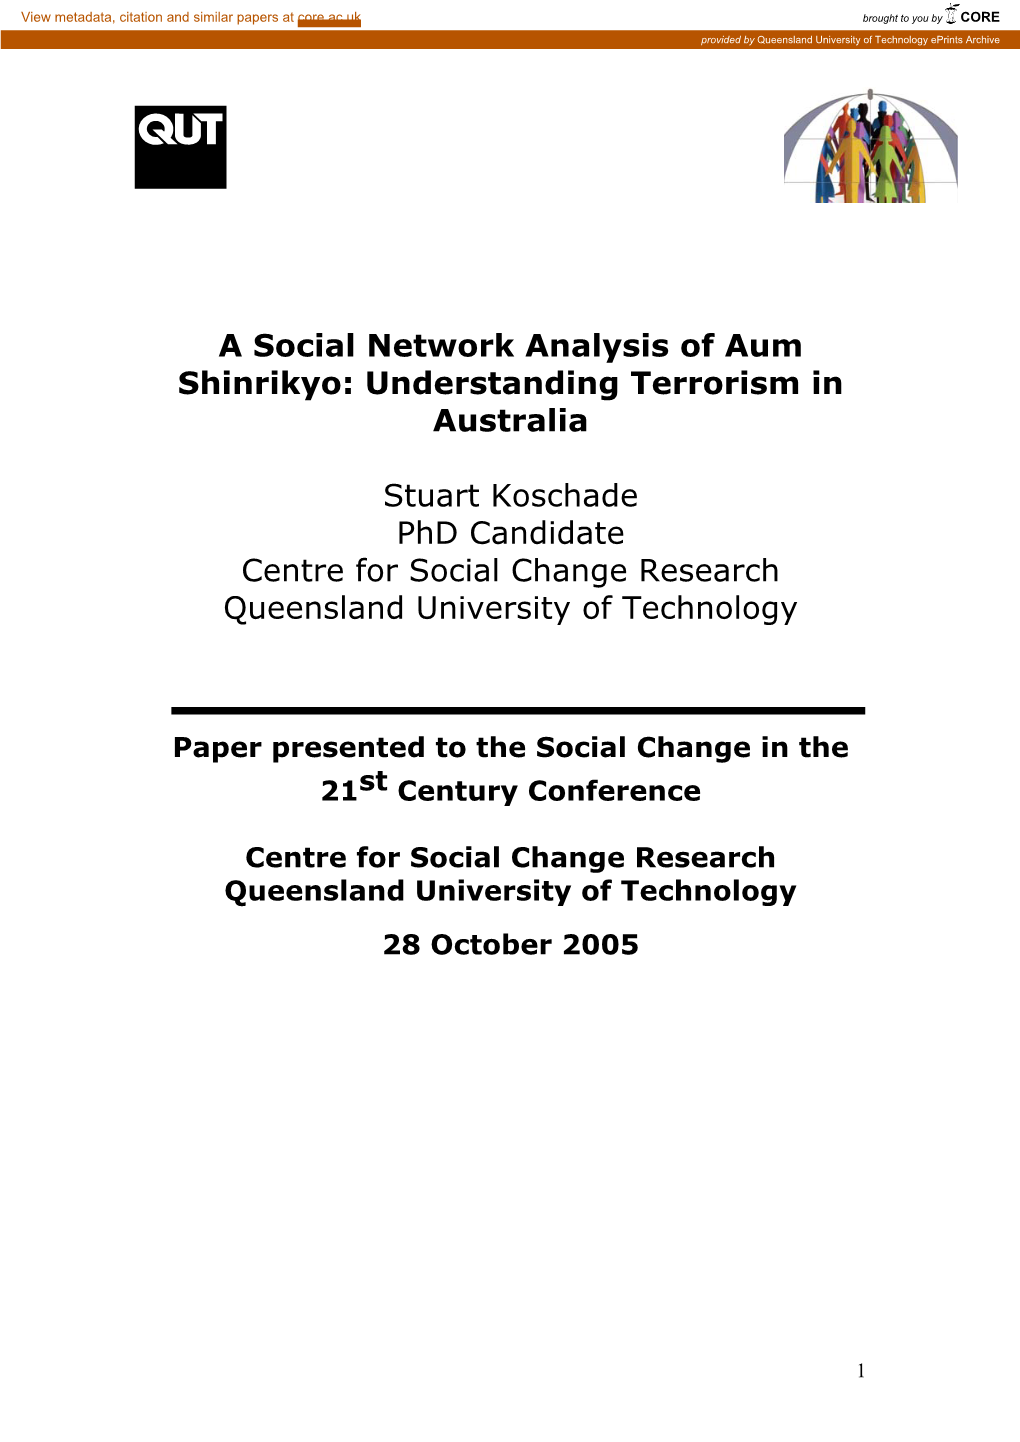 A Social Network Analysis of Aum Shinrikyo: The